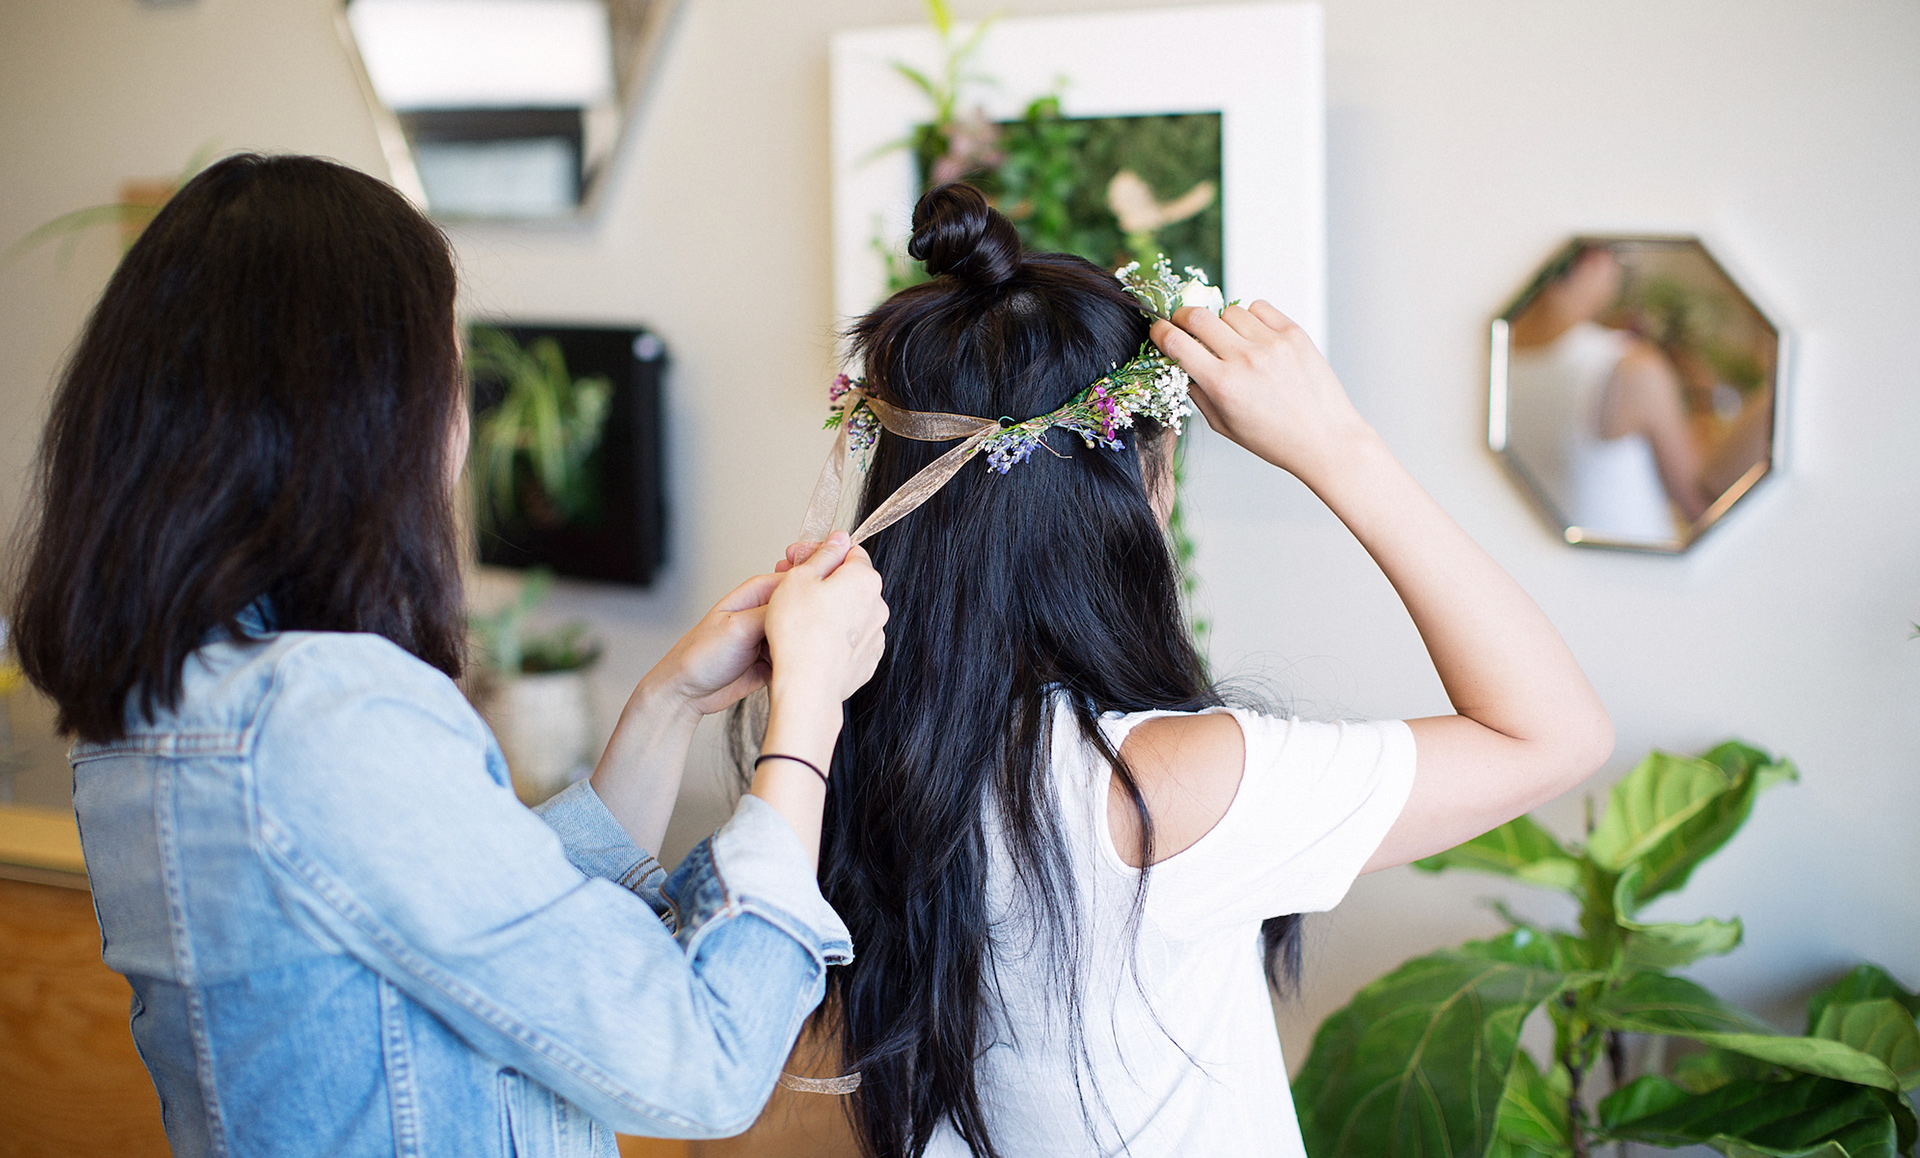 flower shop marketing women with flowers in hair